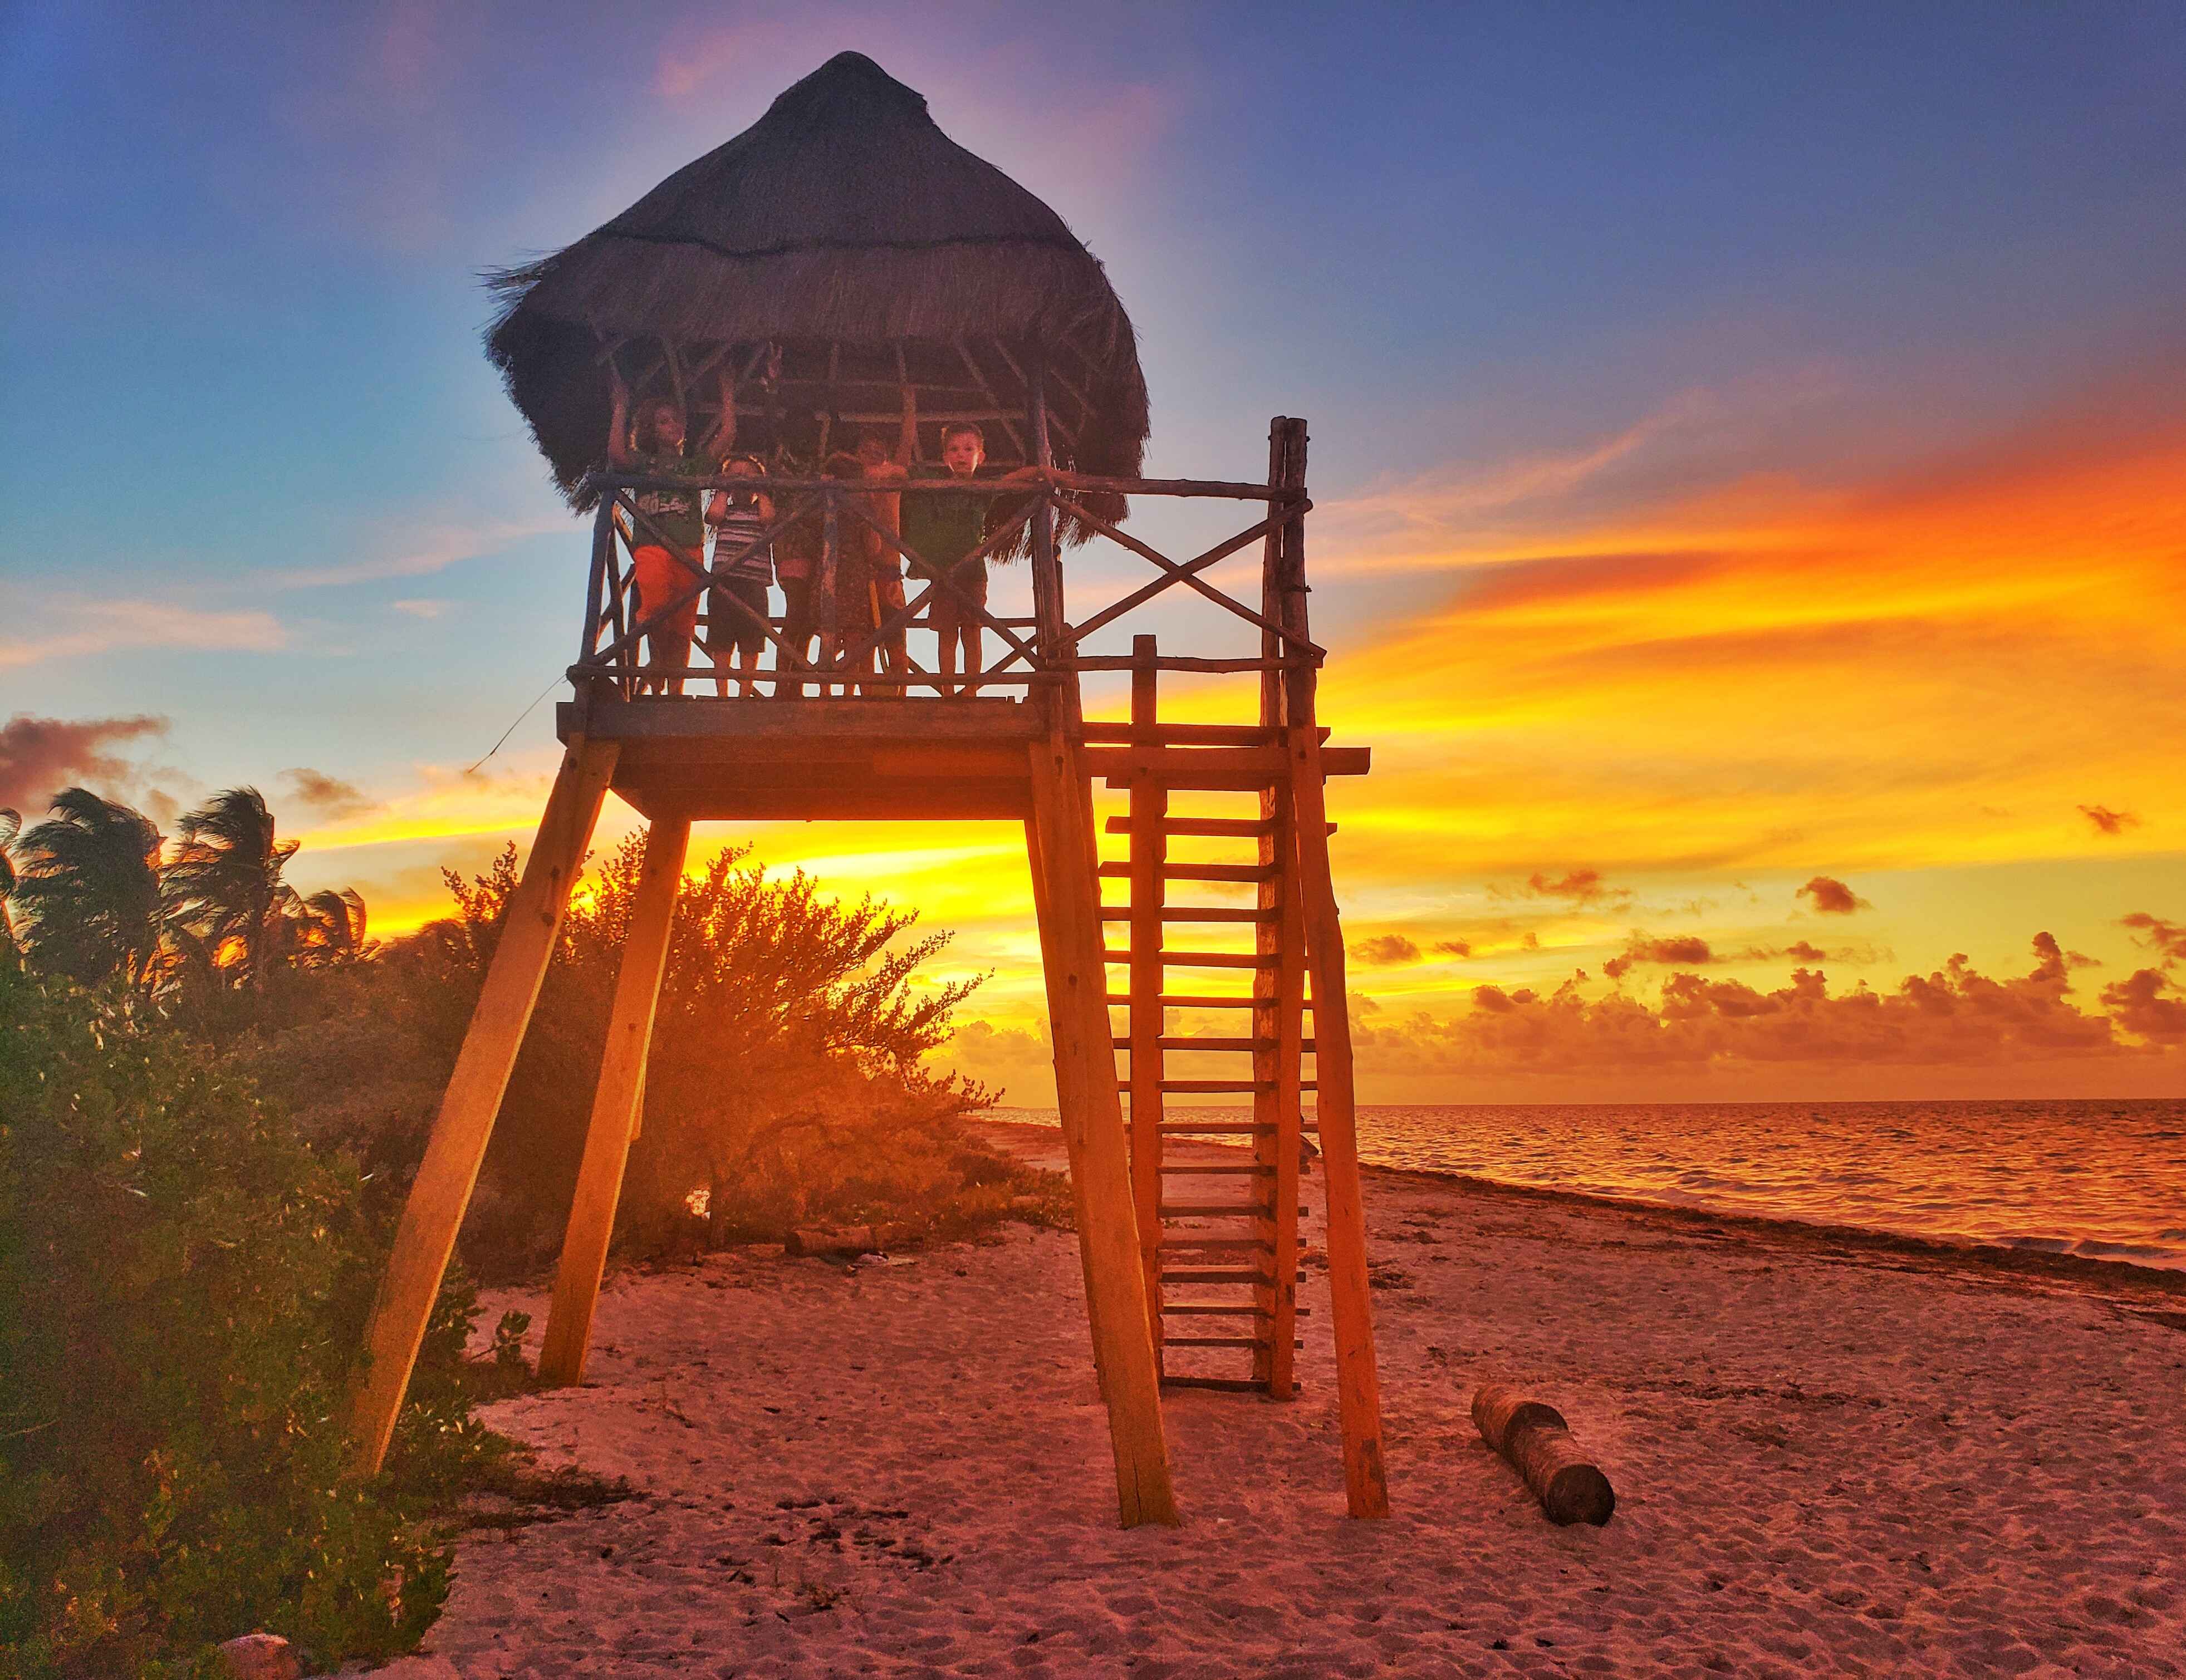 thatched lifeguard tower at dusk 

beset yucatan bachs